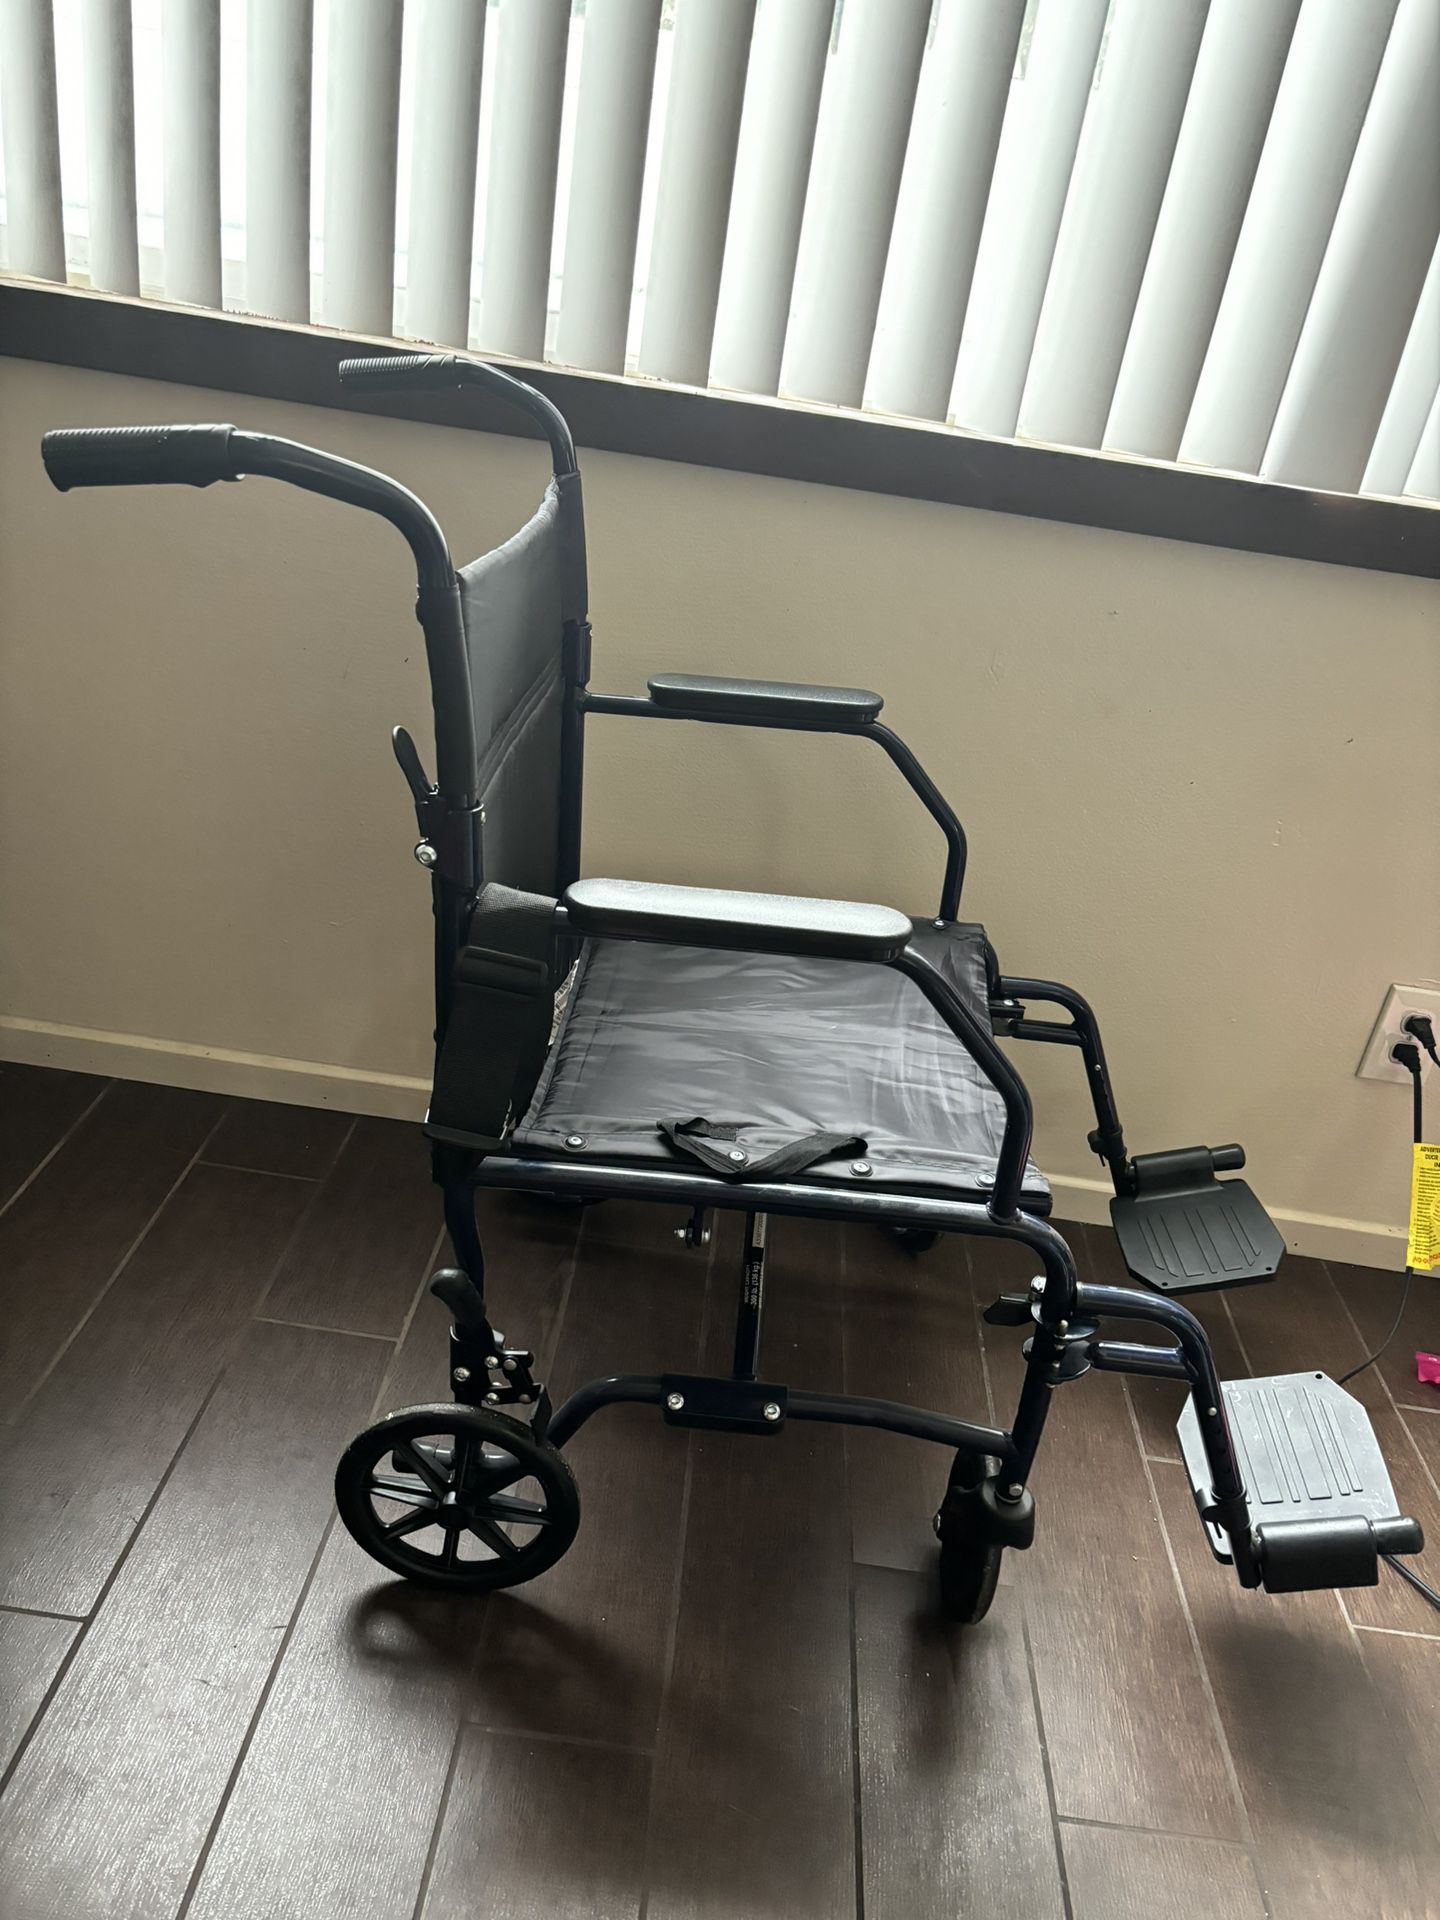 Wheelchair Like New 